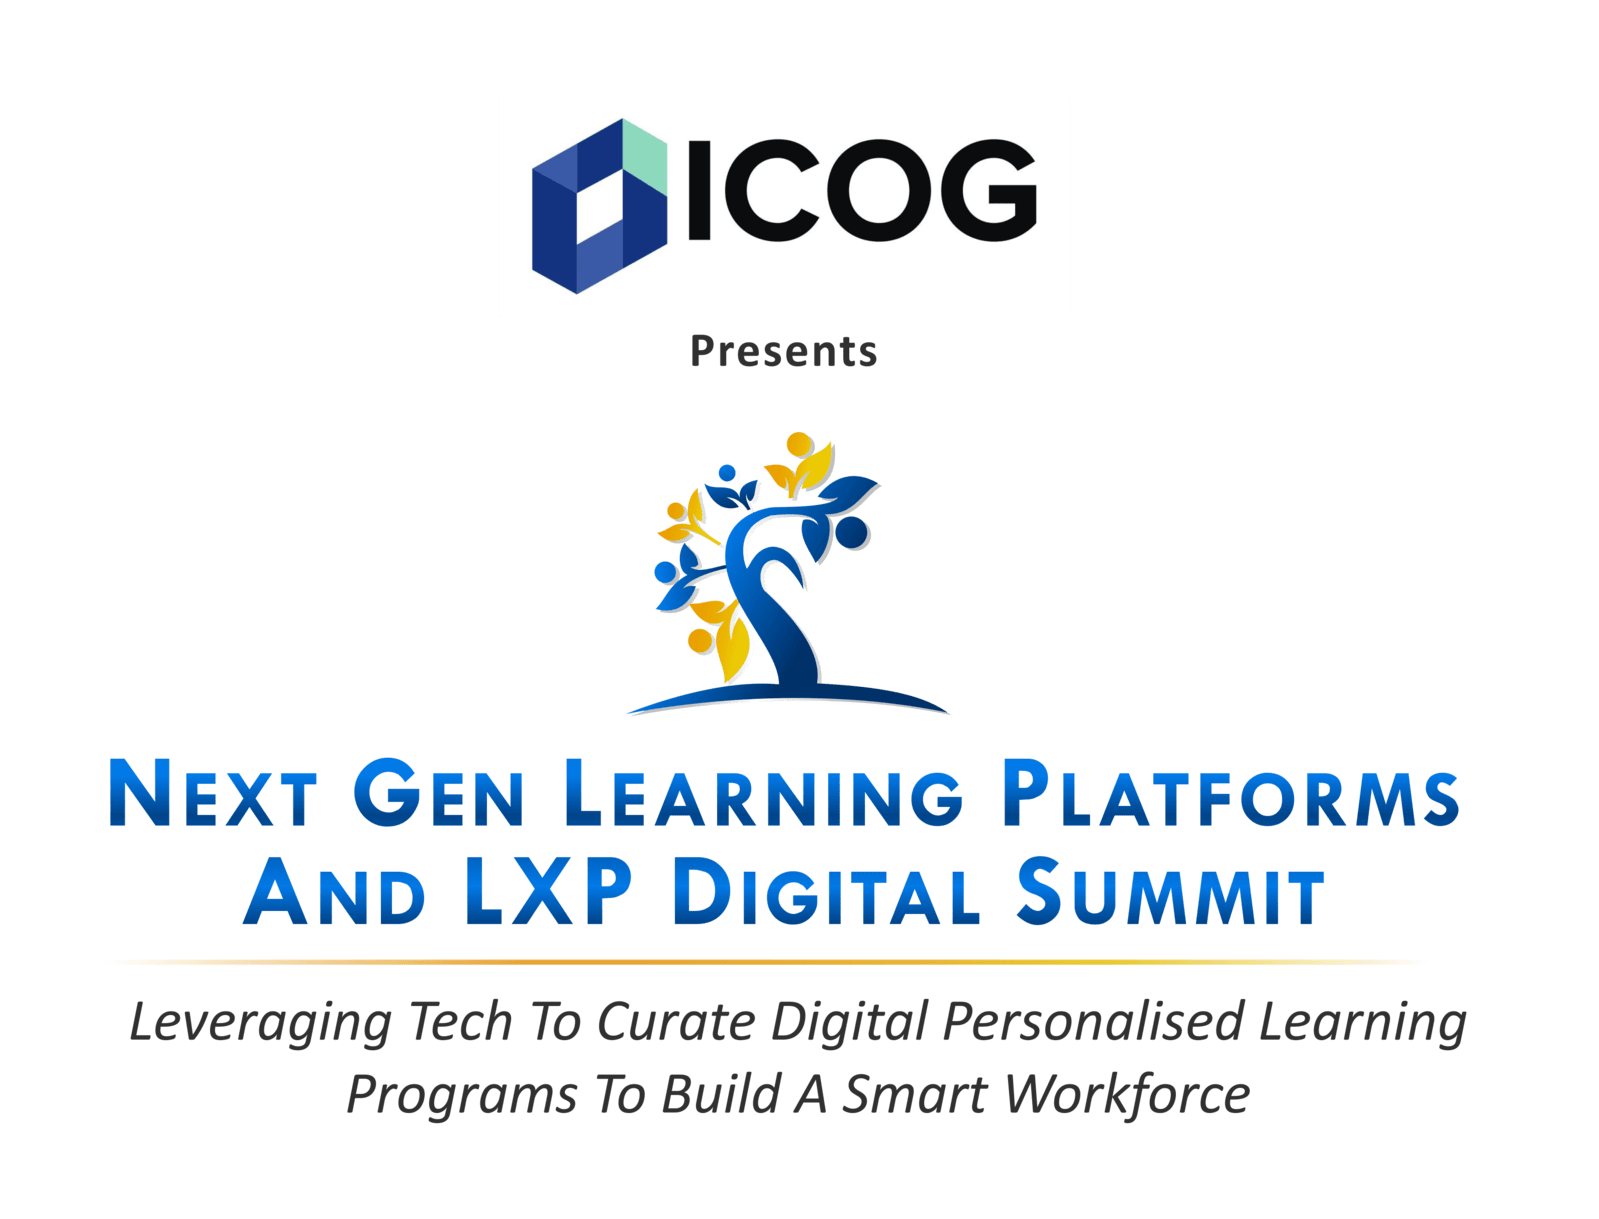 Learning Platforms & LXP Digital Summit